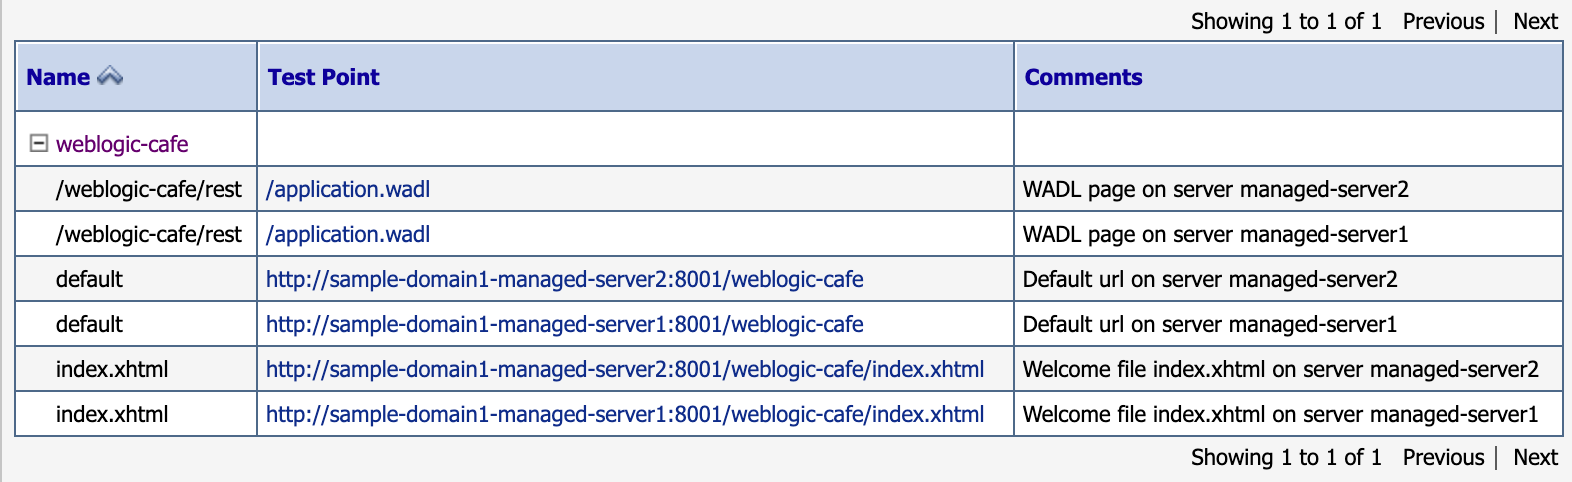 Screenshot der Weblogic-Café Testpunkte.